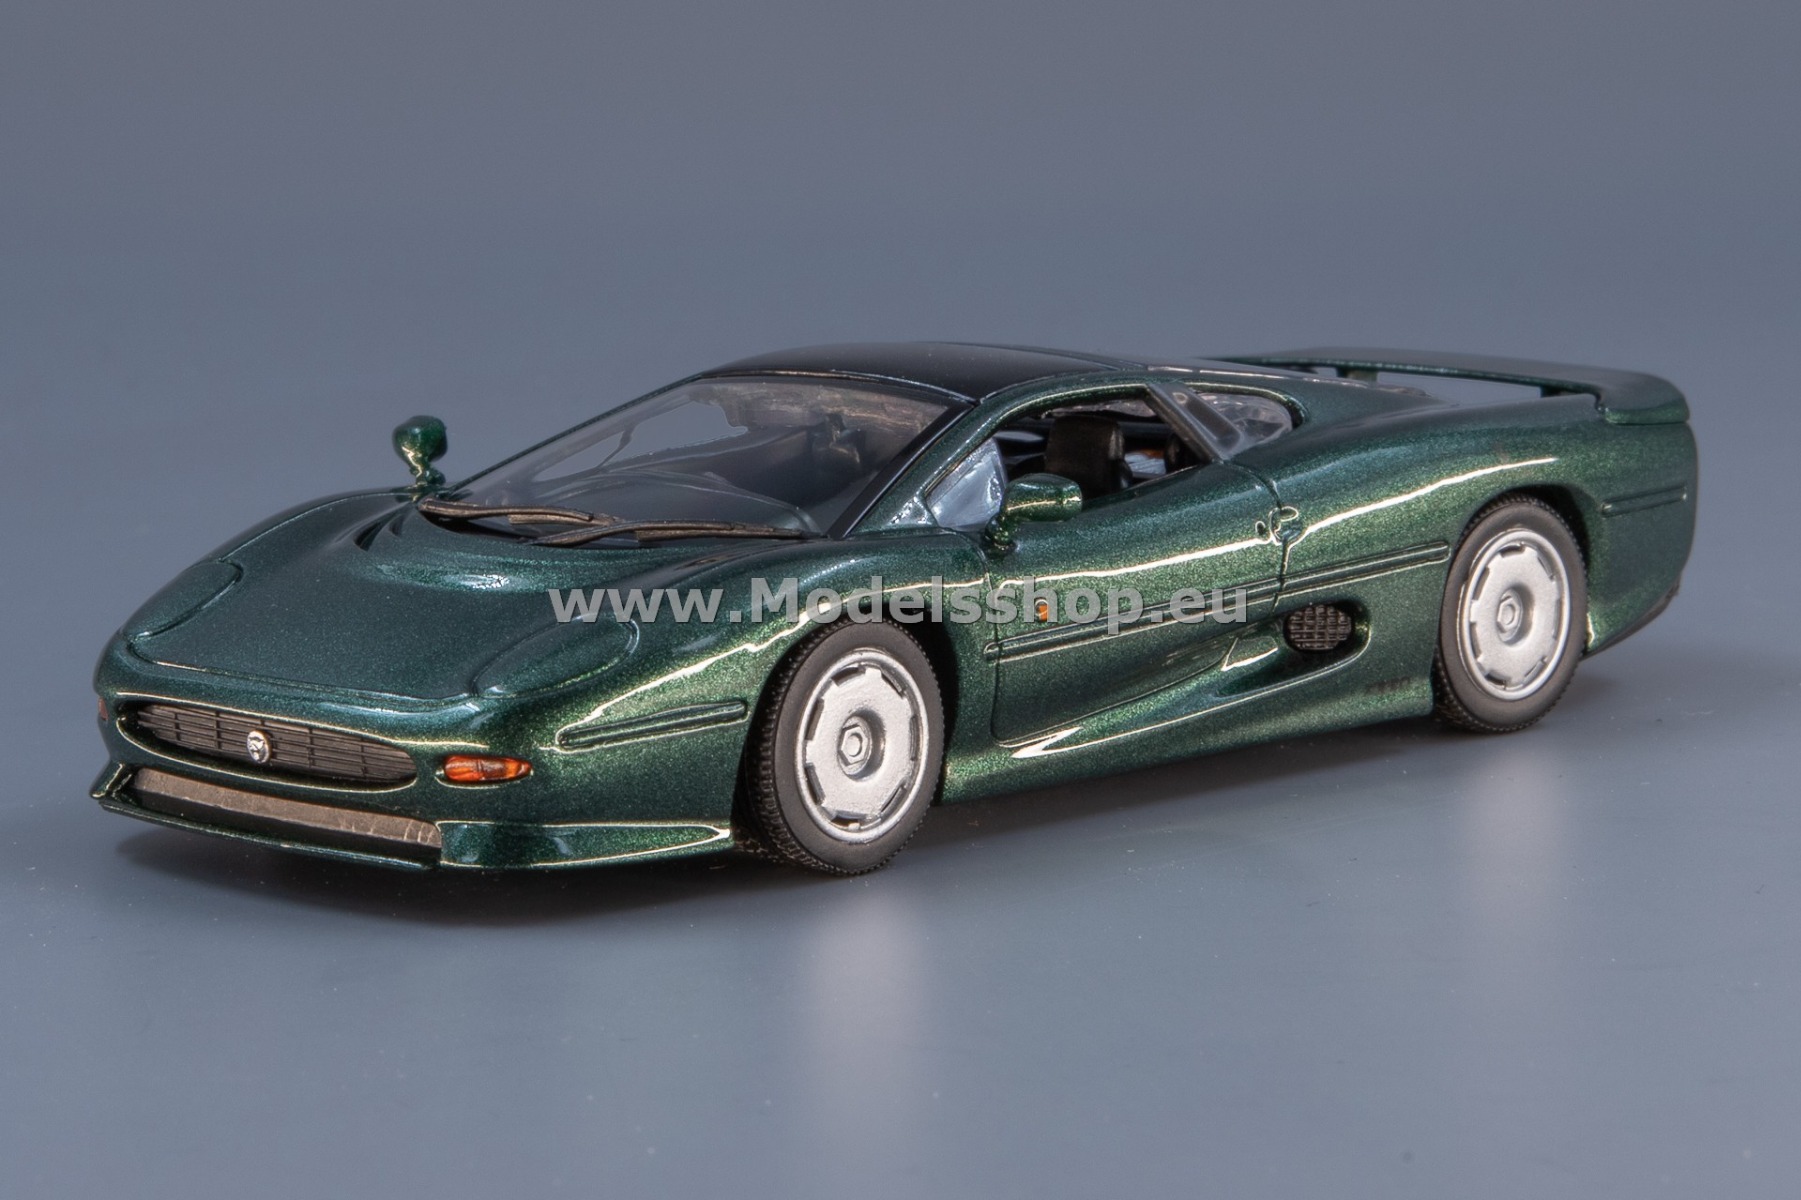 Maxichamps 940102220 Jaguar XJ 220, 1991 /green metallic/